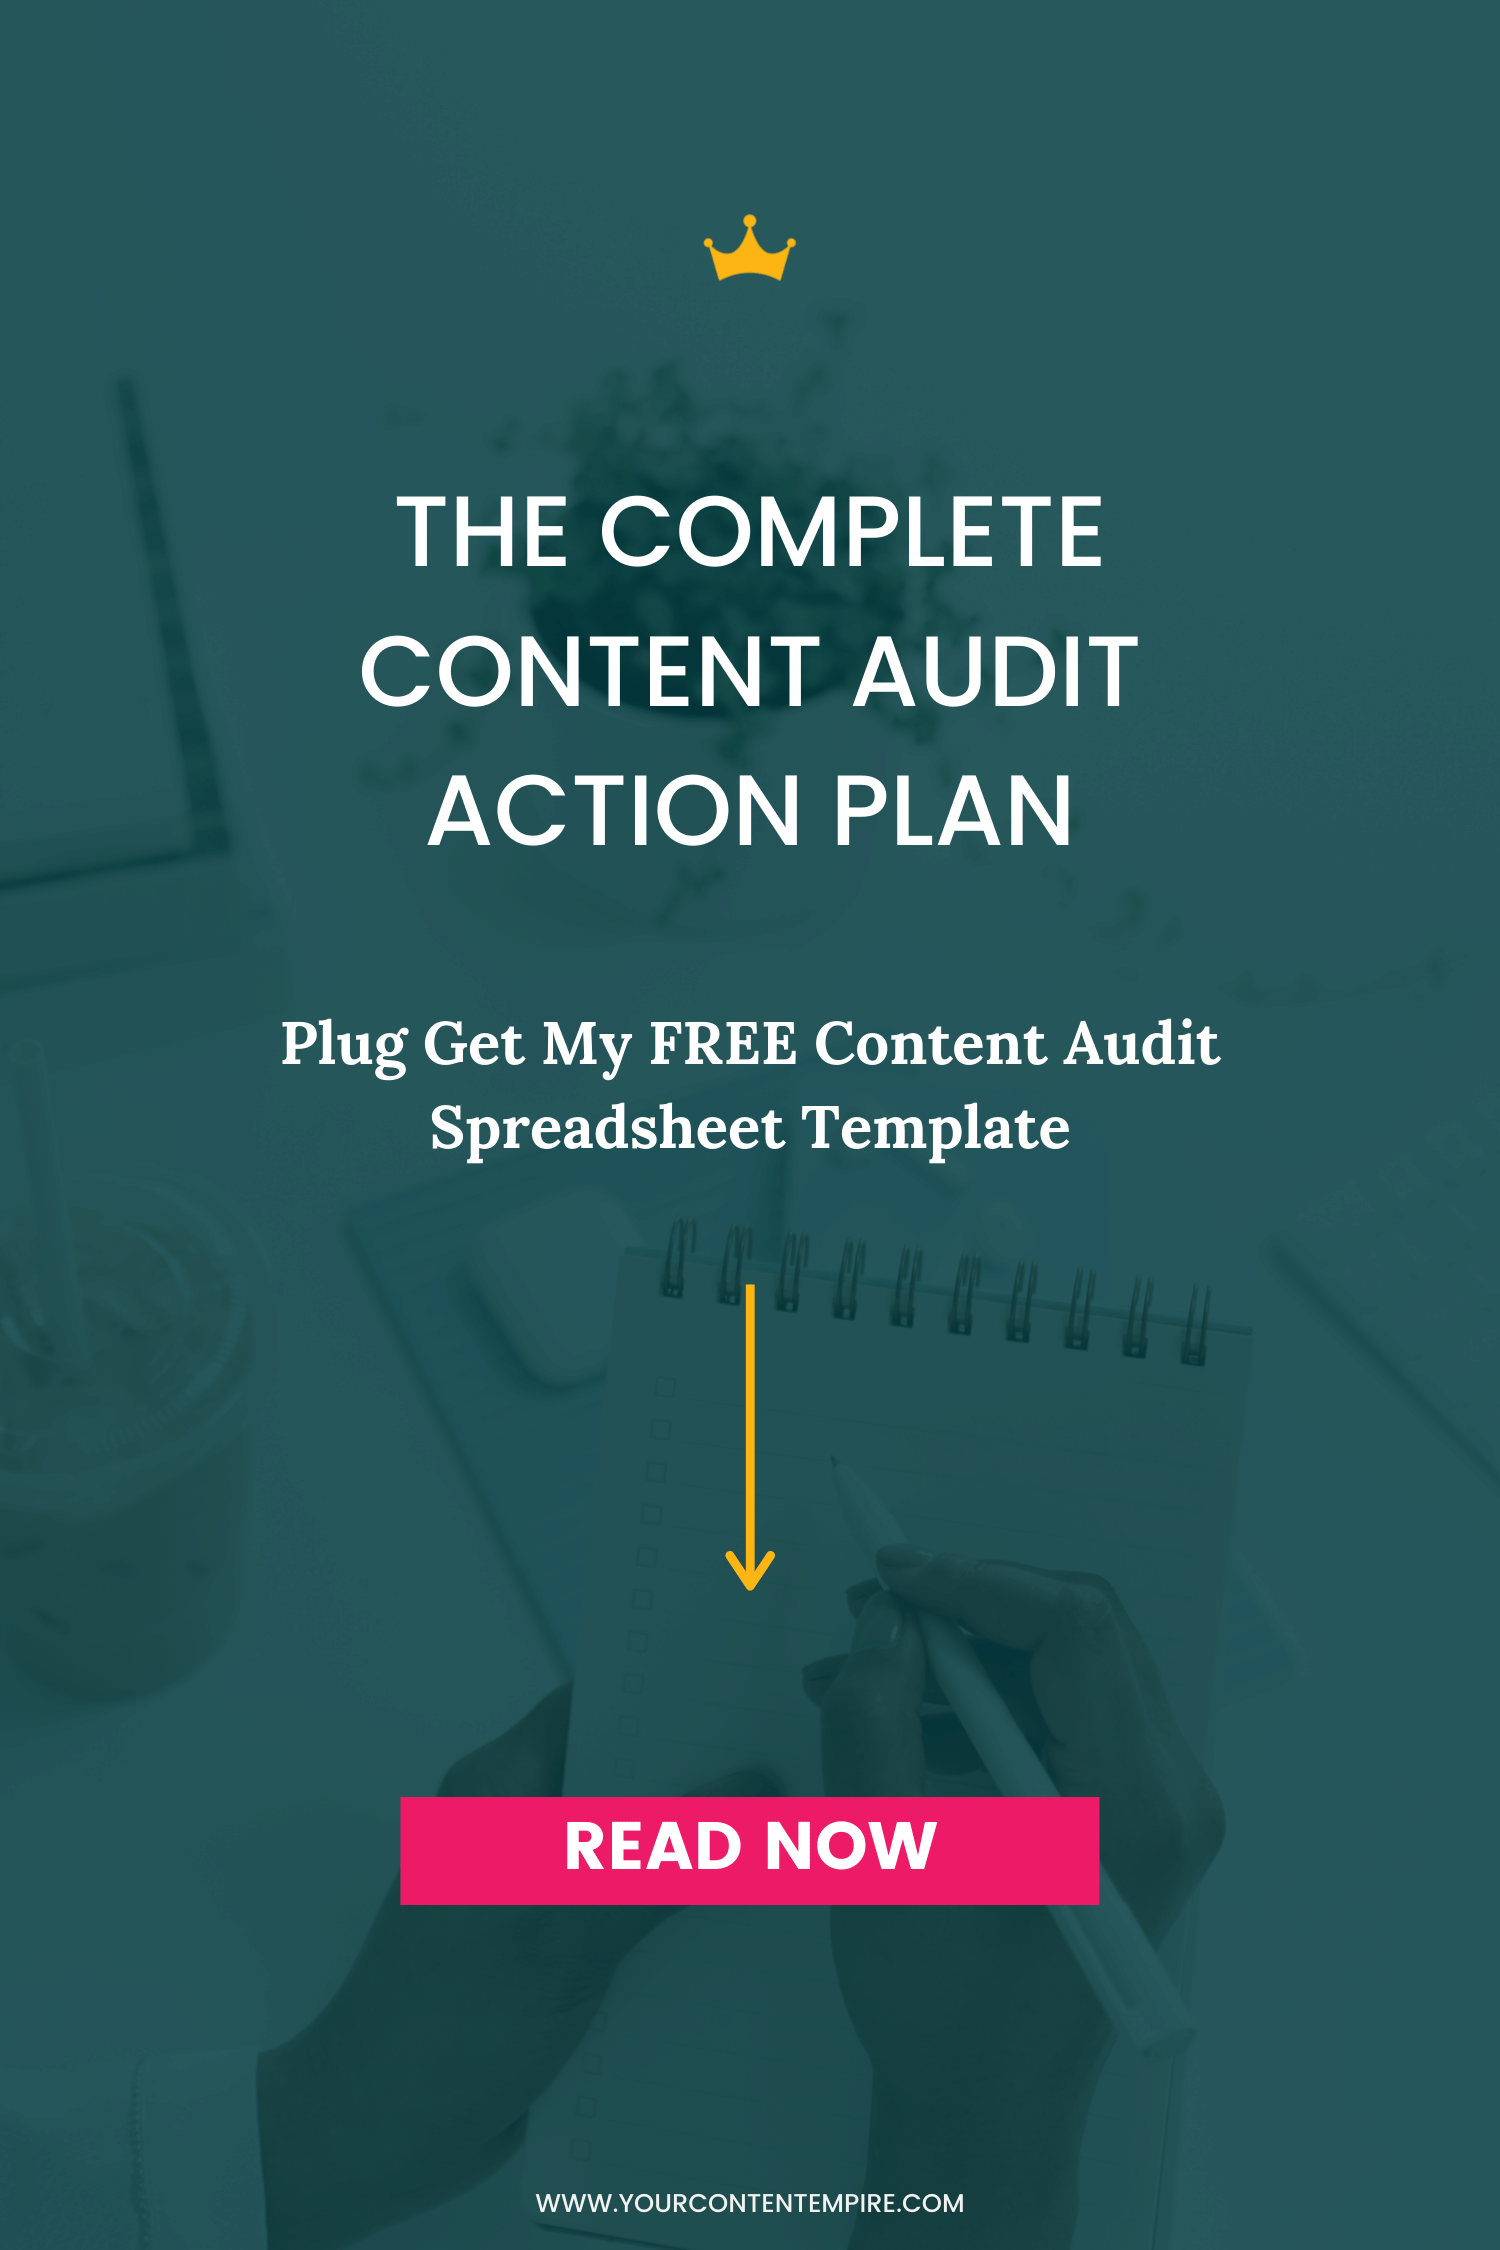 The Complete Content Audit Action Plan